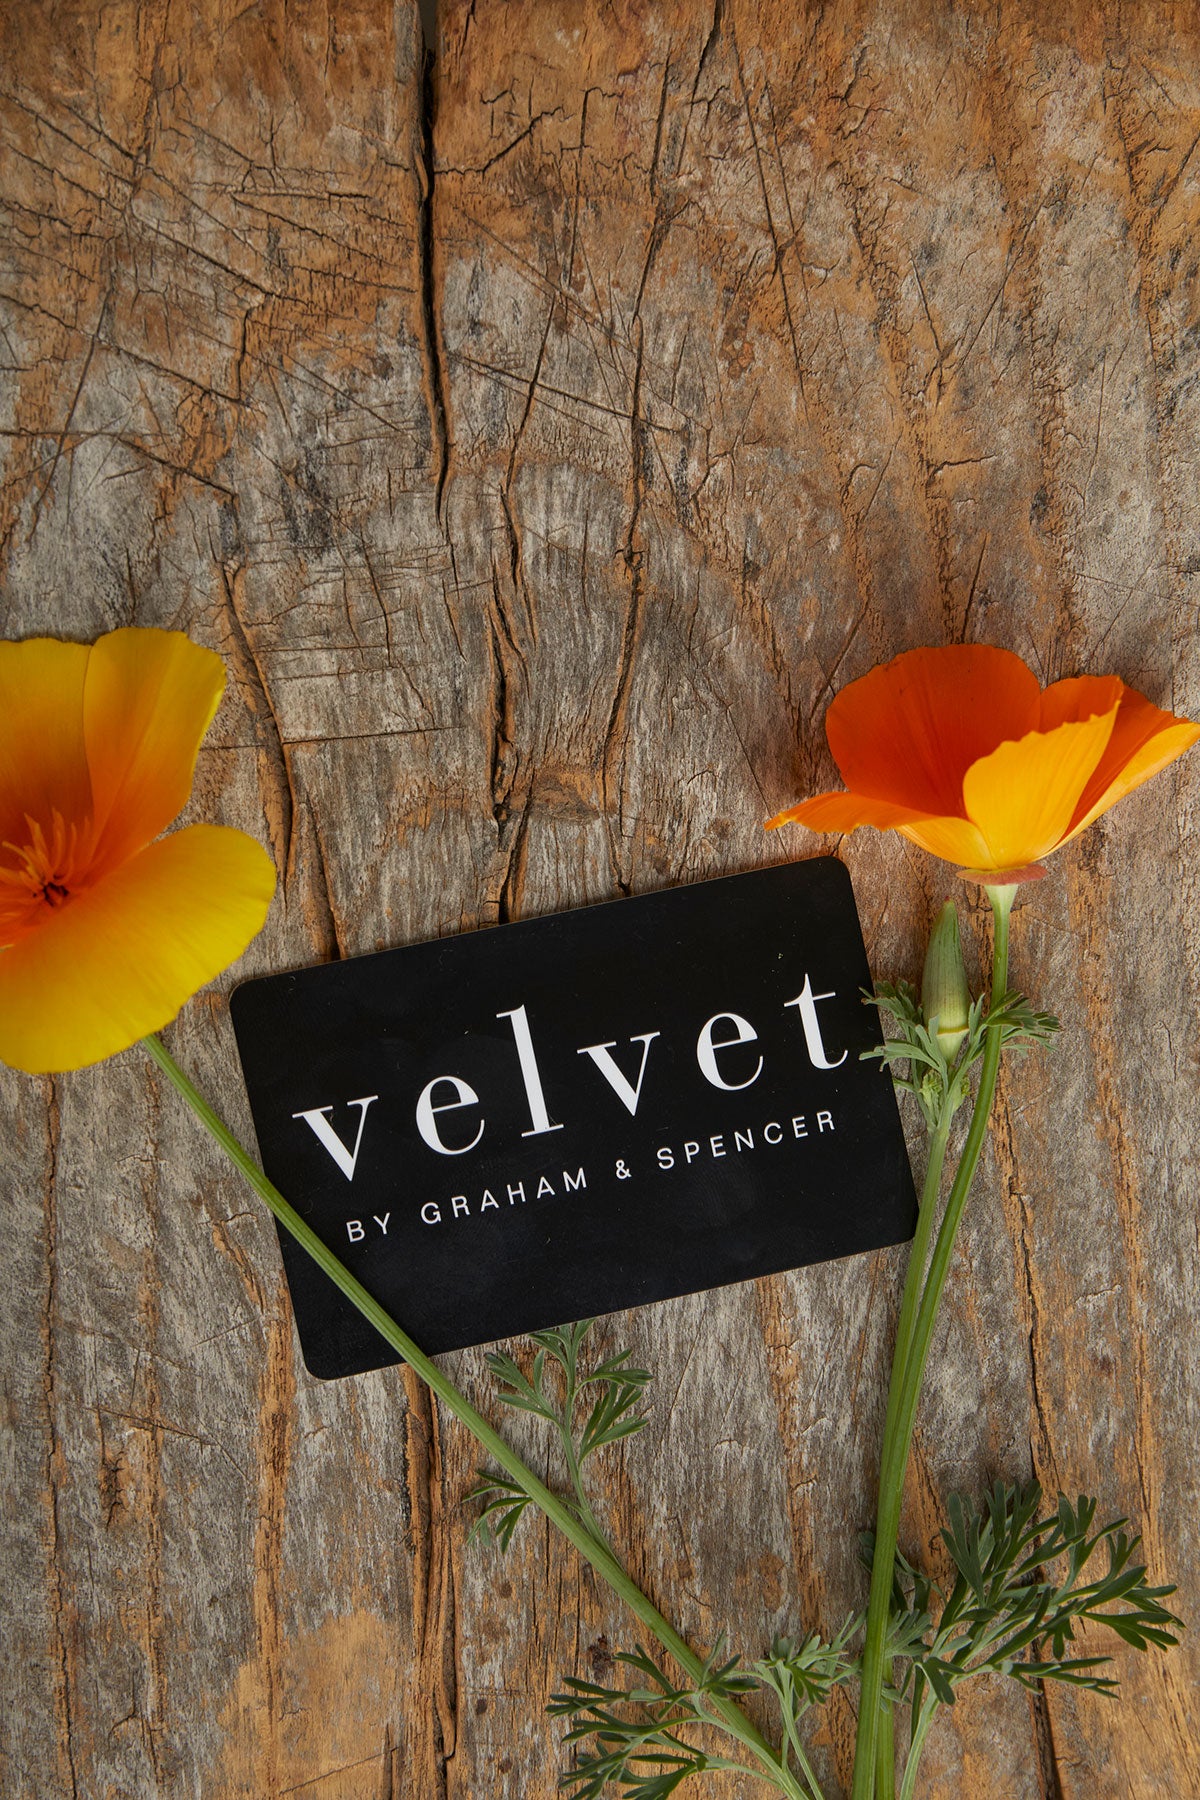   A Velvet by Graham & Spencer E-Gift Card sitting on a wooden table. 